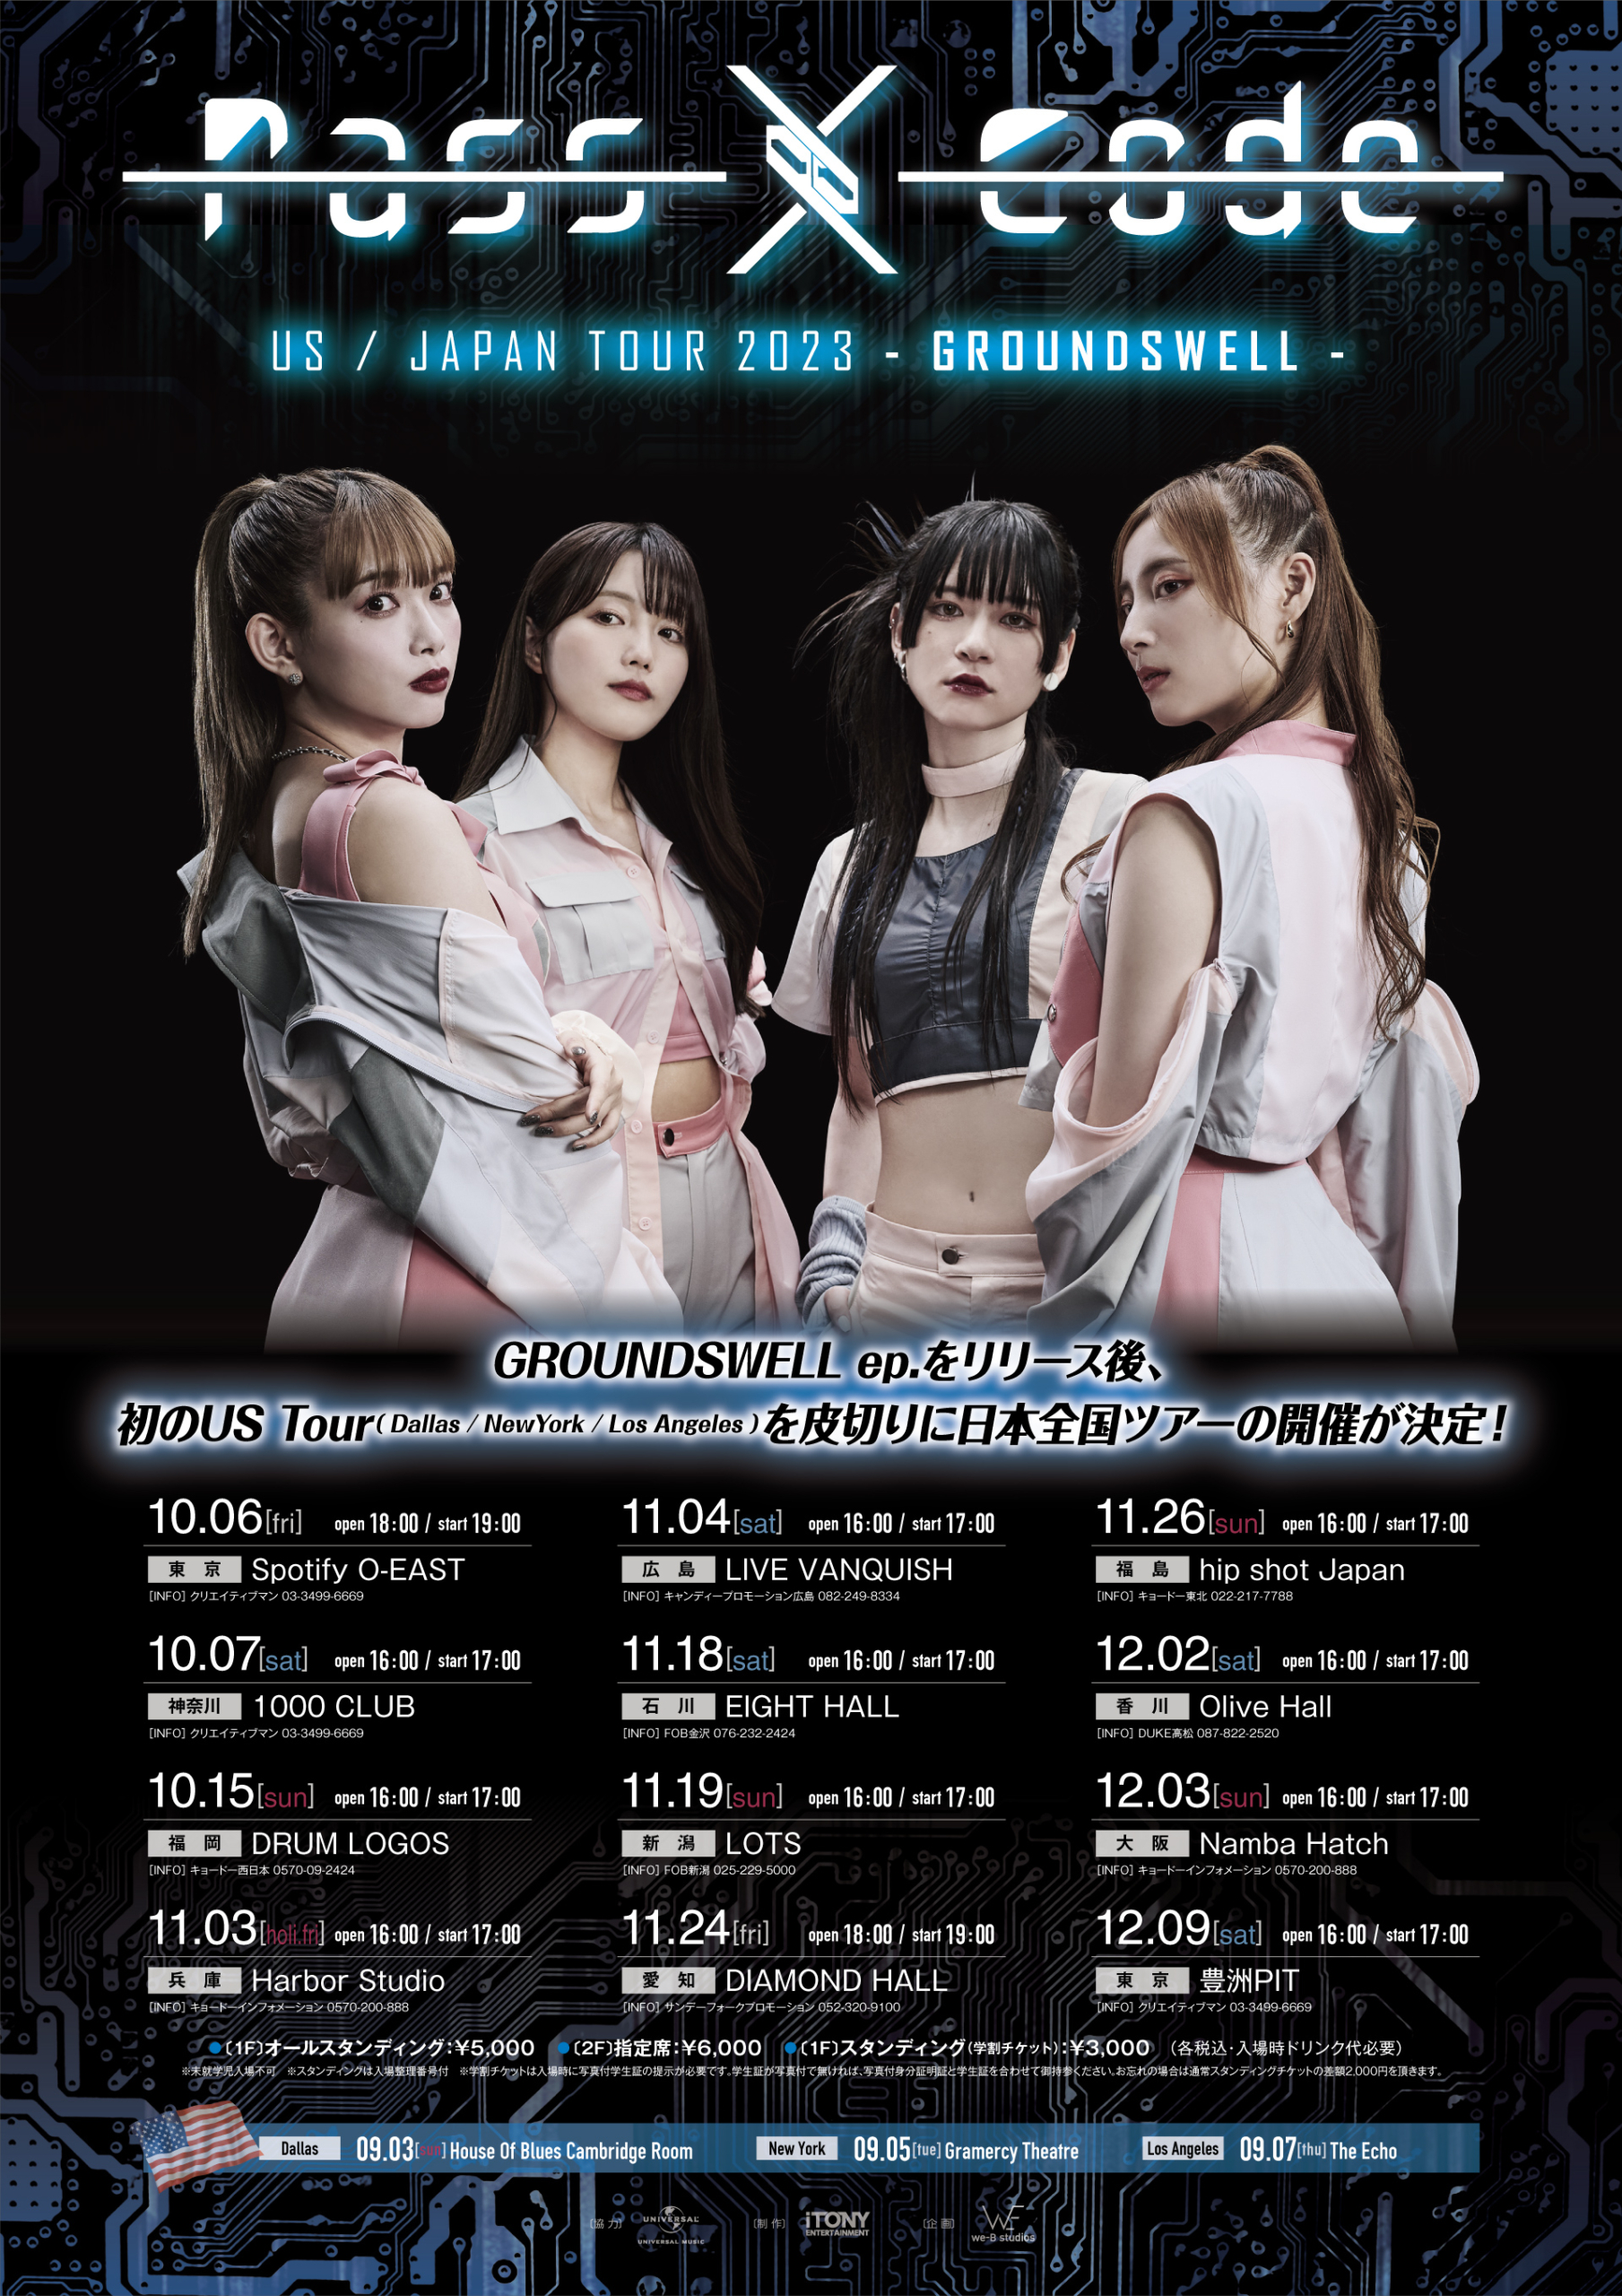 US/JAPAN TOUR 2023